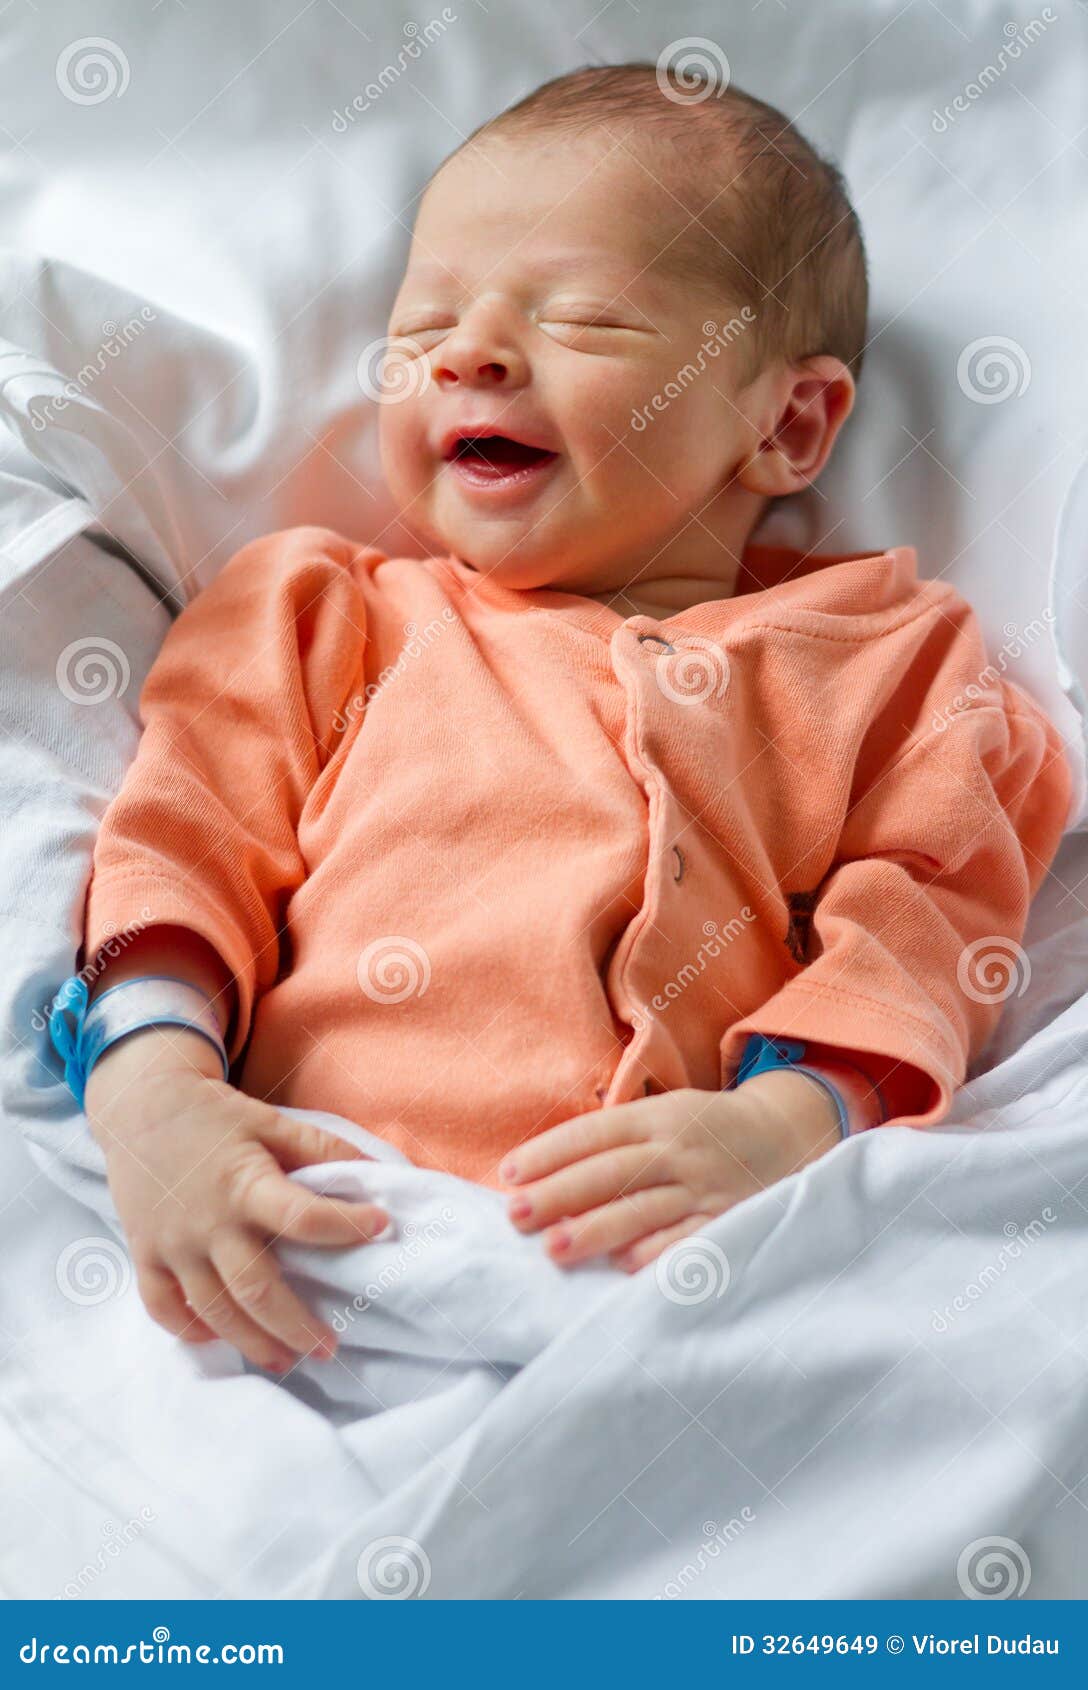 Newborn baby smile stock image. Image of newborn, smiling 